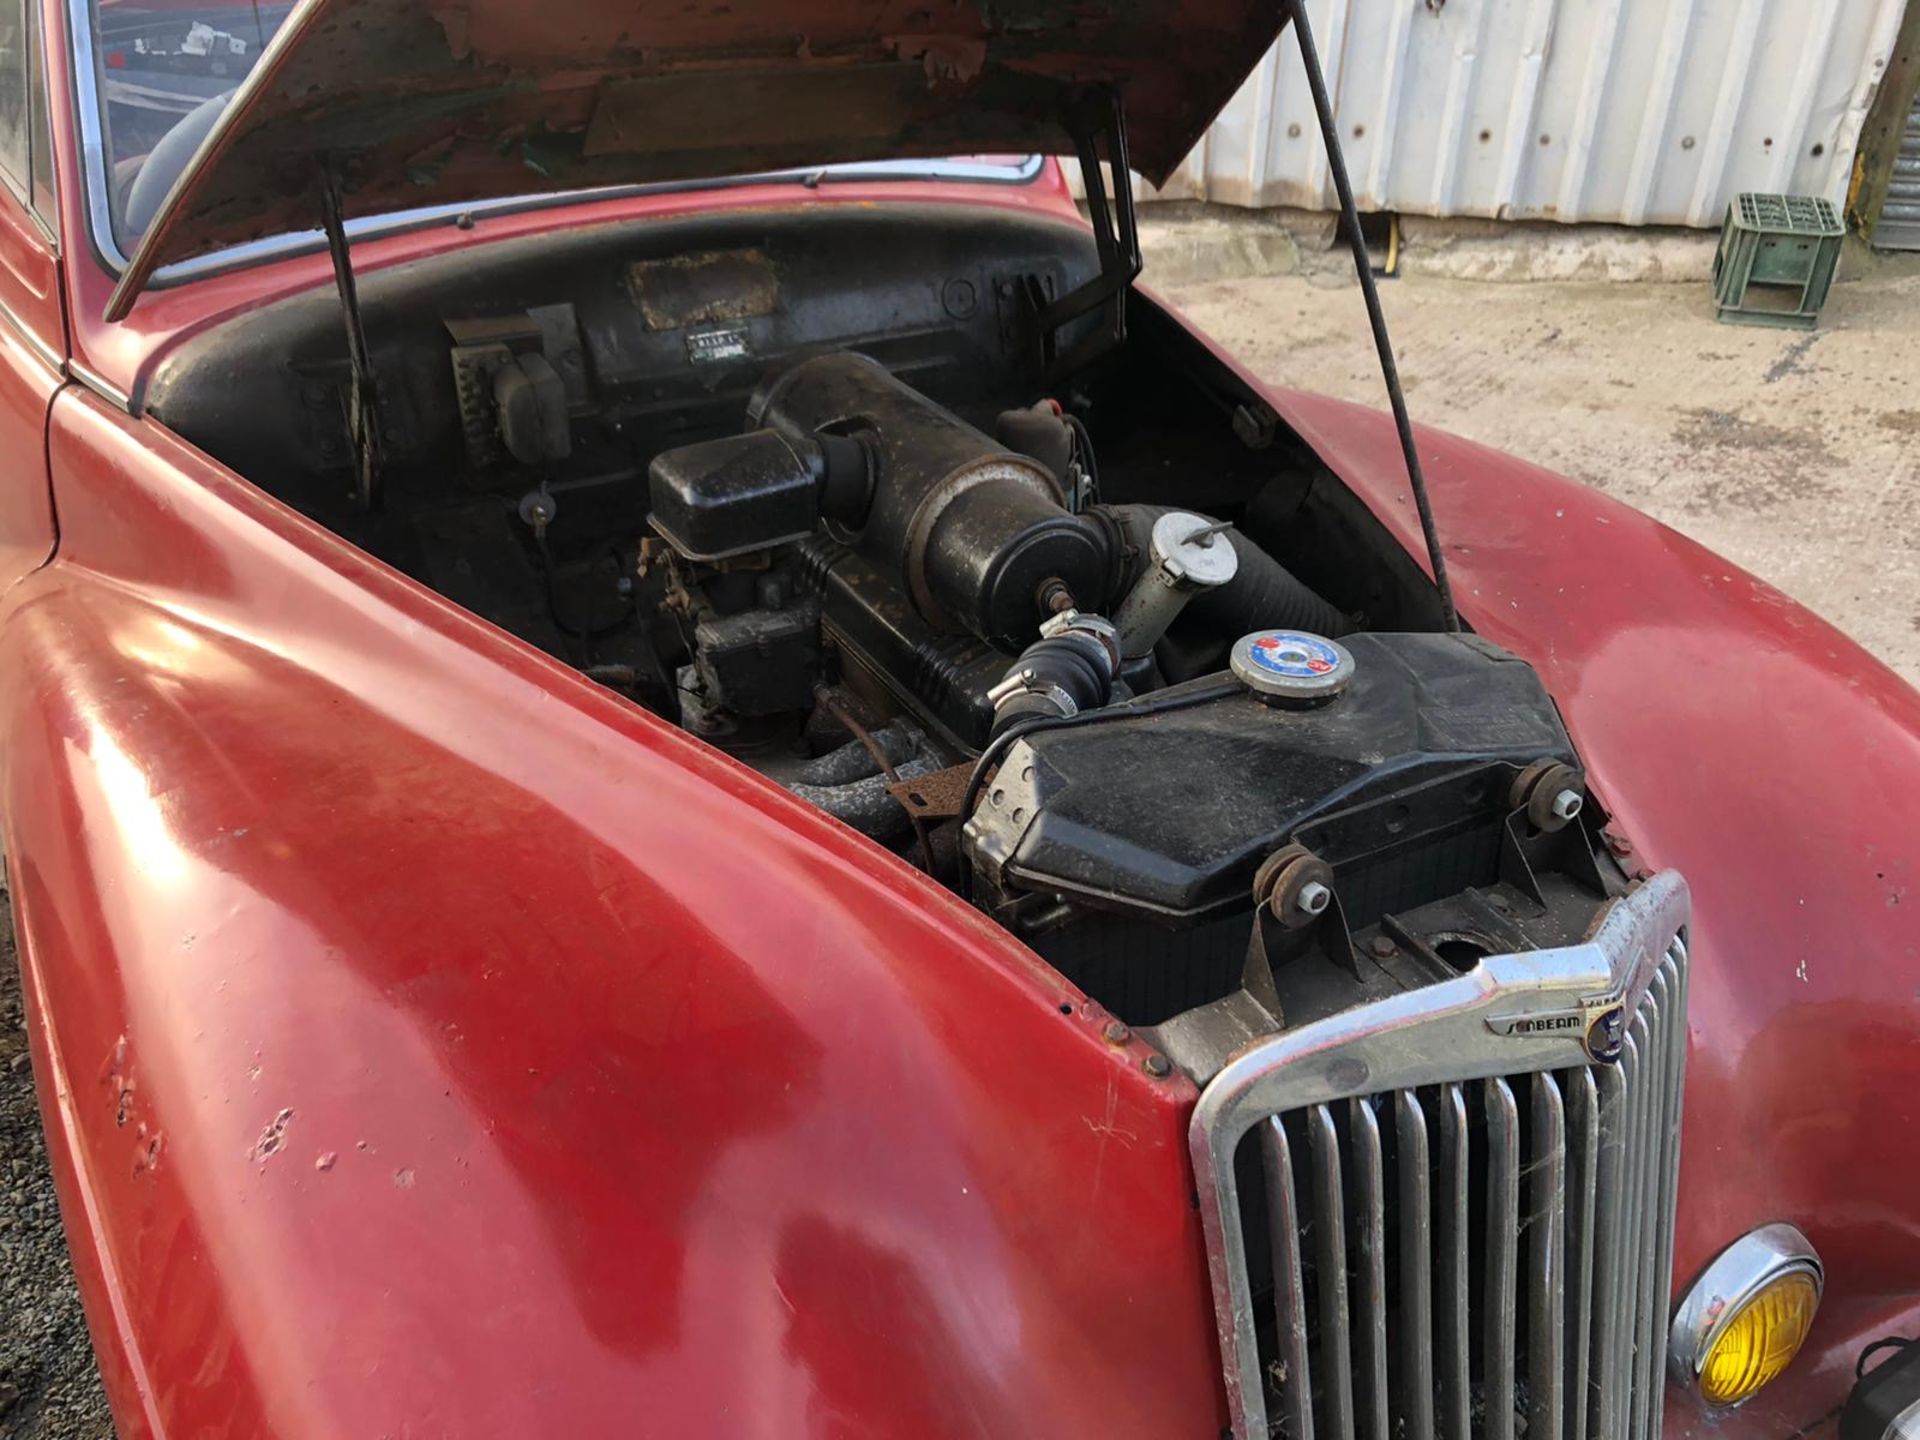 A 1950 Sunbeam-Talbot 80 Drop Head Coupe Registration number MTT 553 Red Garage stored Restoration - Image 2 of 6